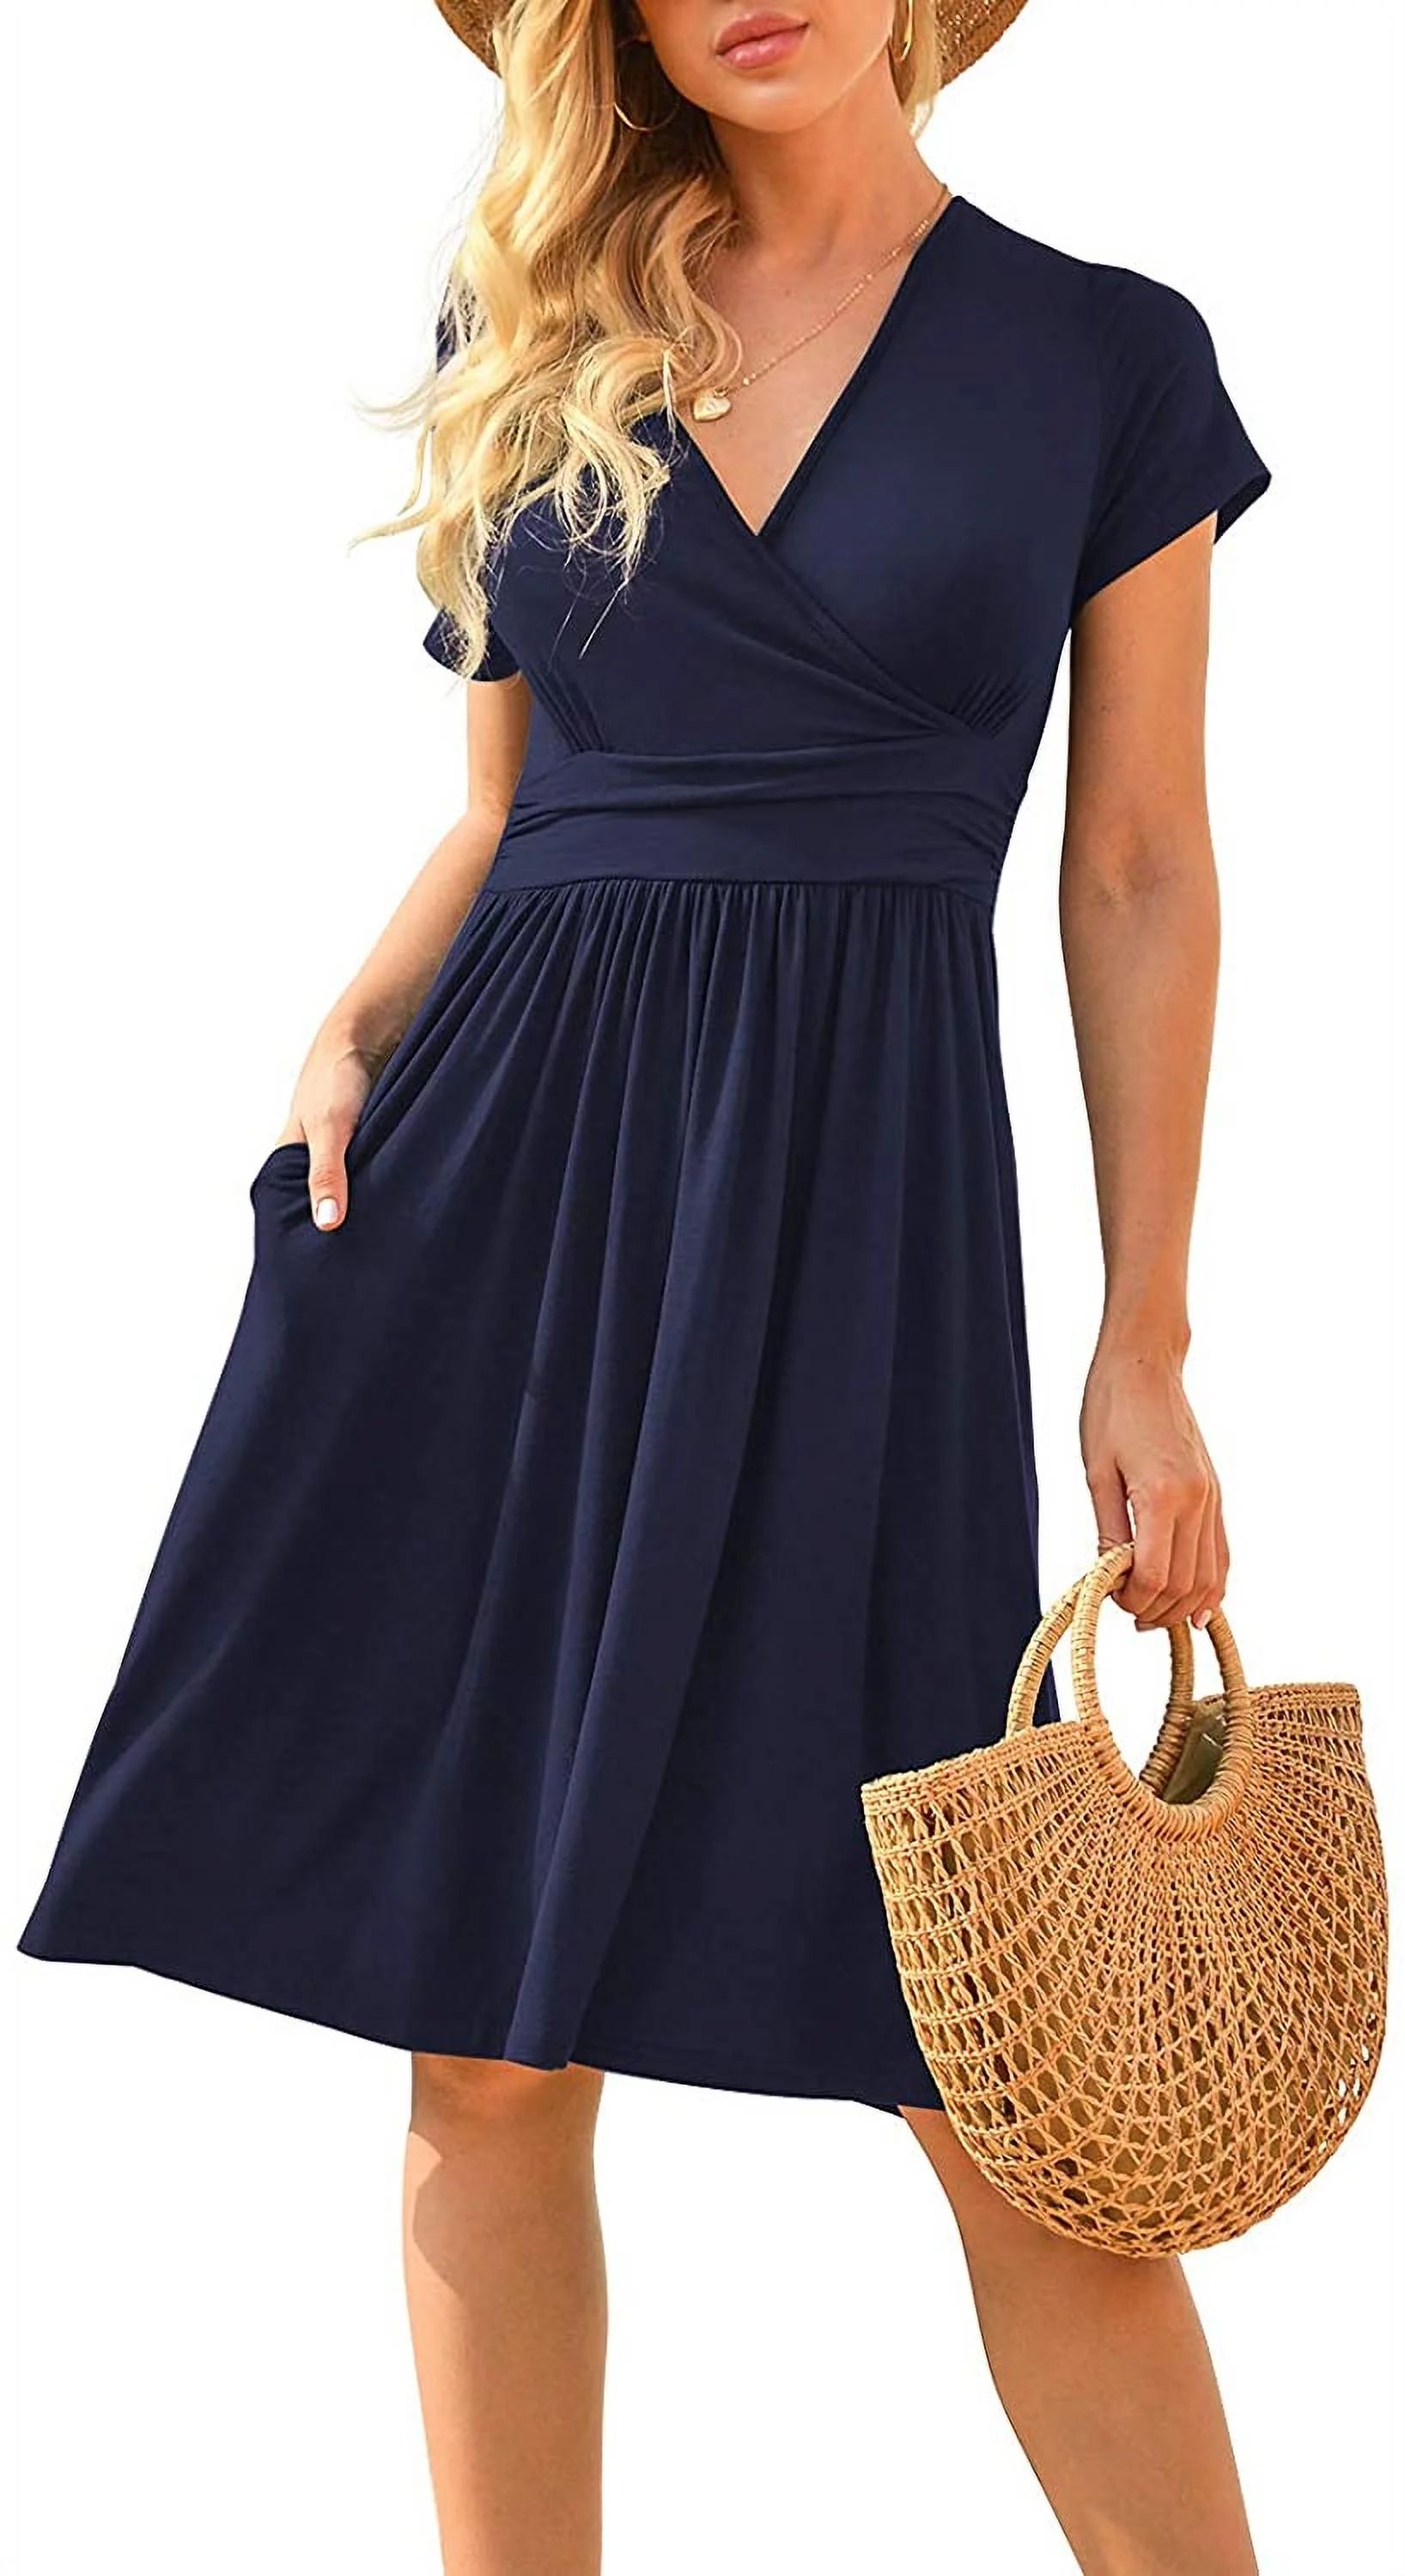 POPYOUNG Women's Summer Casual Short Sleeve V-Neck Short Party Dress with Pockets Navy Blue S | Walmart (US)